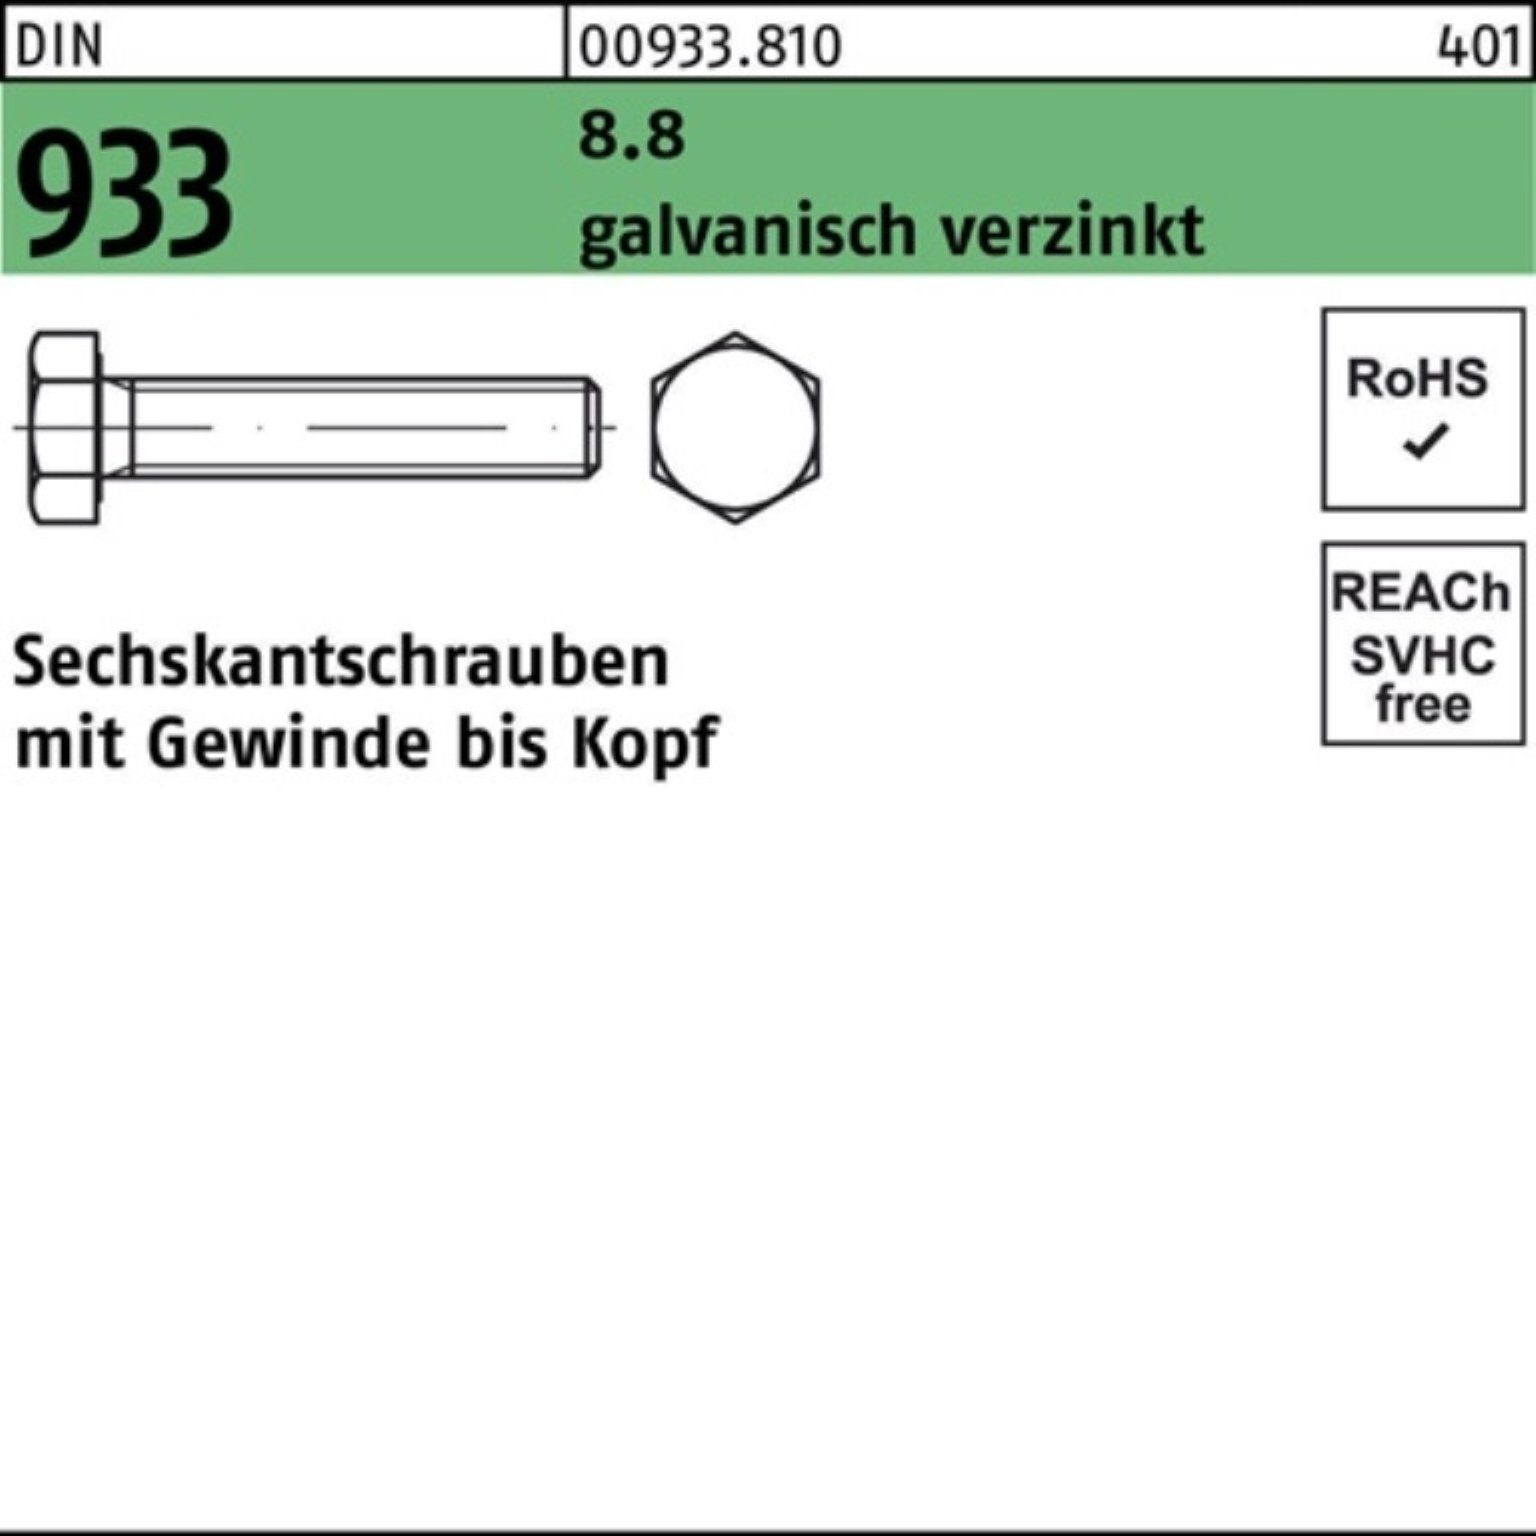 1 VG M36x 280 Pack Sechskantschraube 933 Stü 8.8 Reyher DIN 100er Sechskantschraube galv.verz.